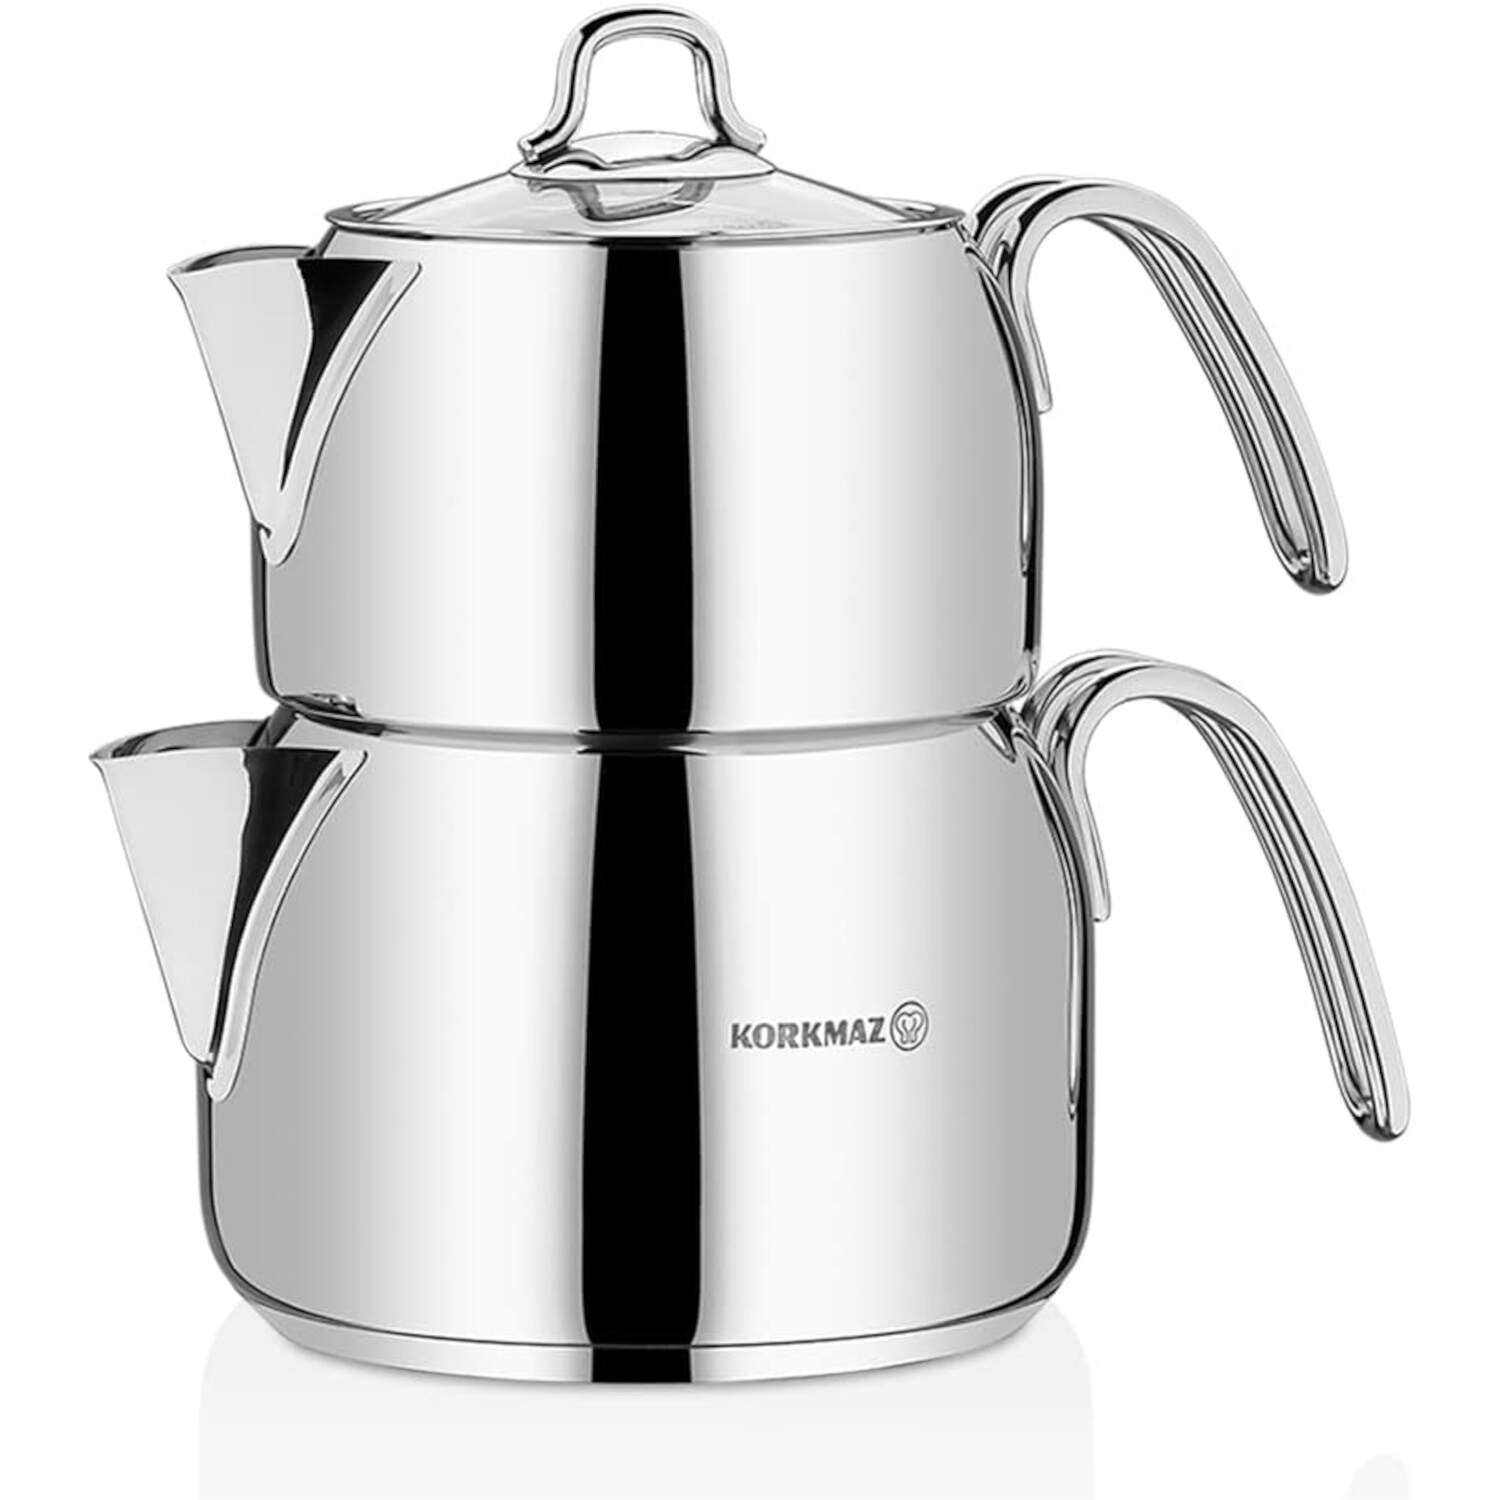 Korkmaz Perla 18/10 Stainless Steel Teapot, Induction Compatible